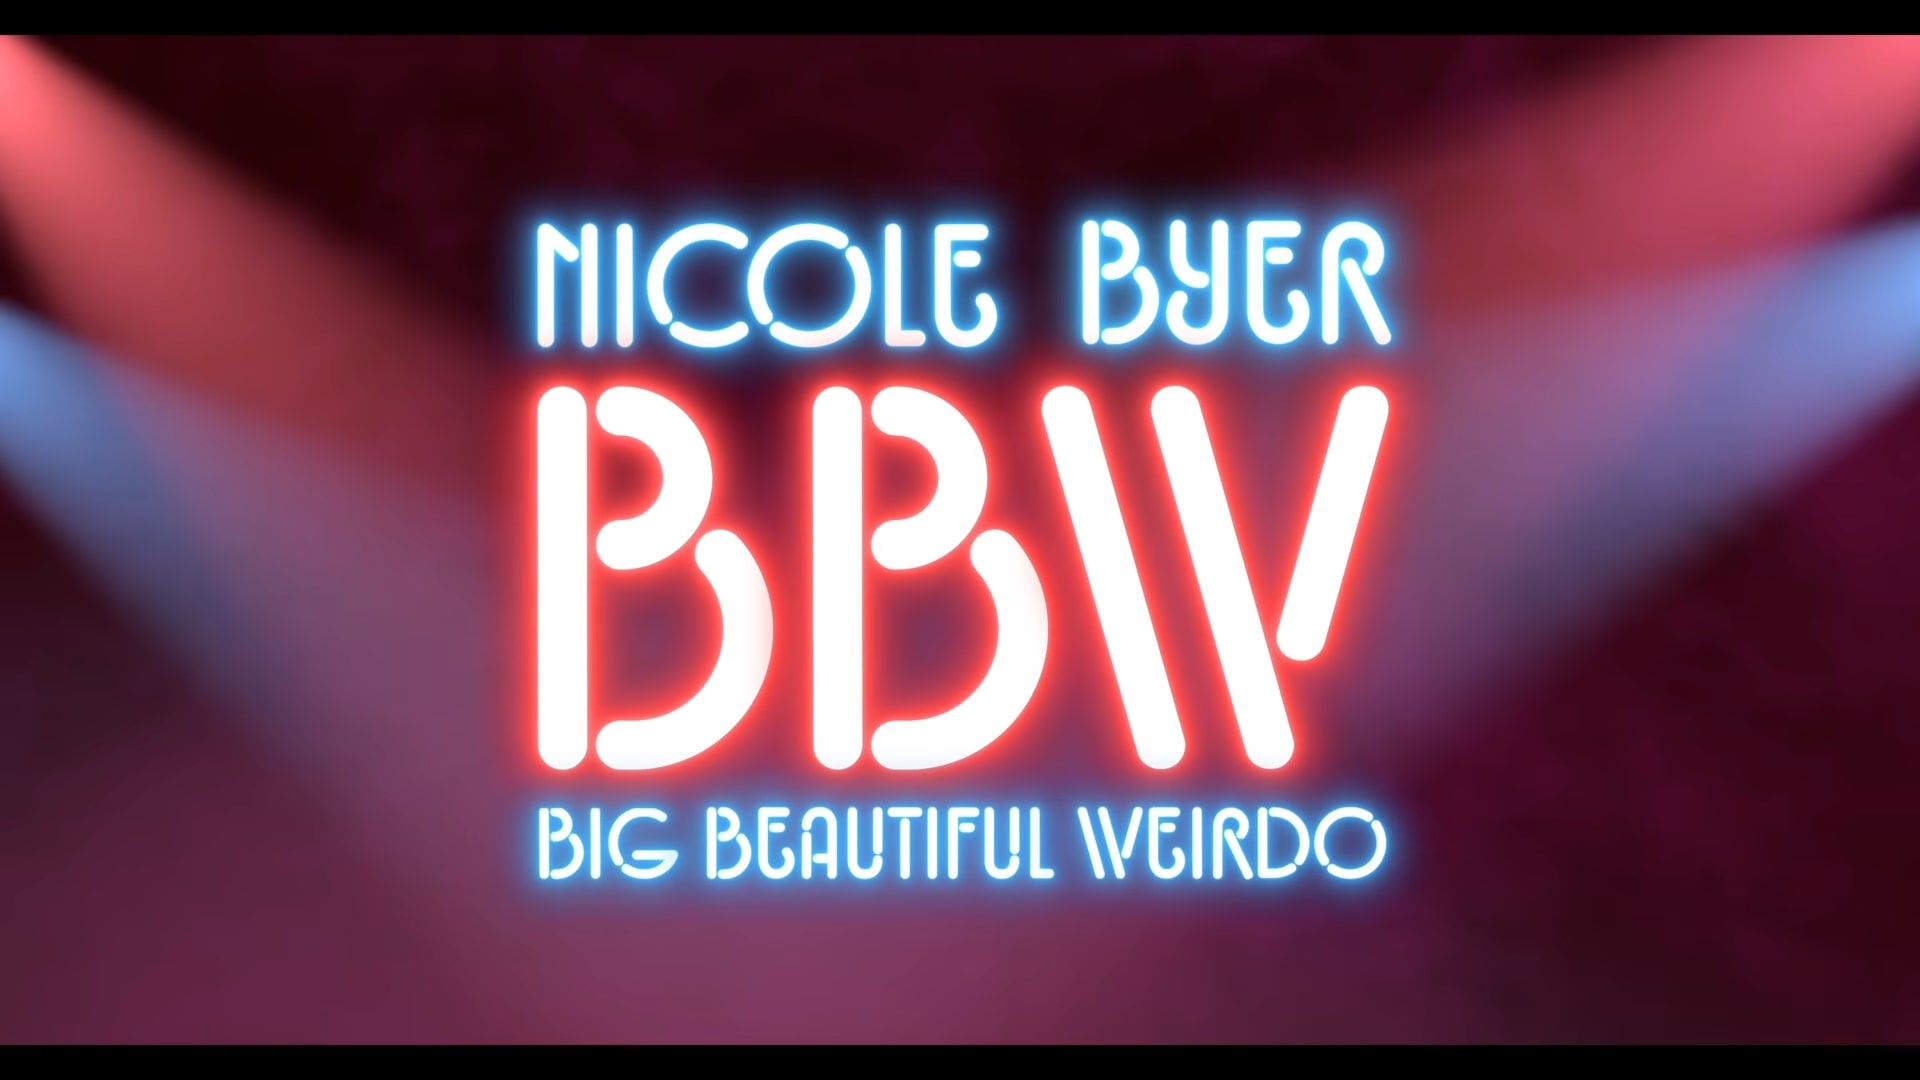 Netflix Nicole Byer BBW Big Beautiful Weirdo Trailer, Coming to Netflix in December 2021